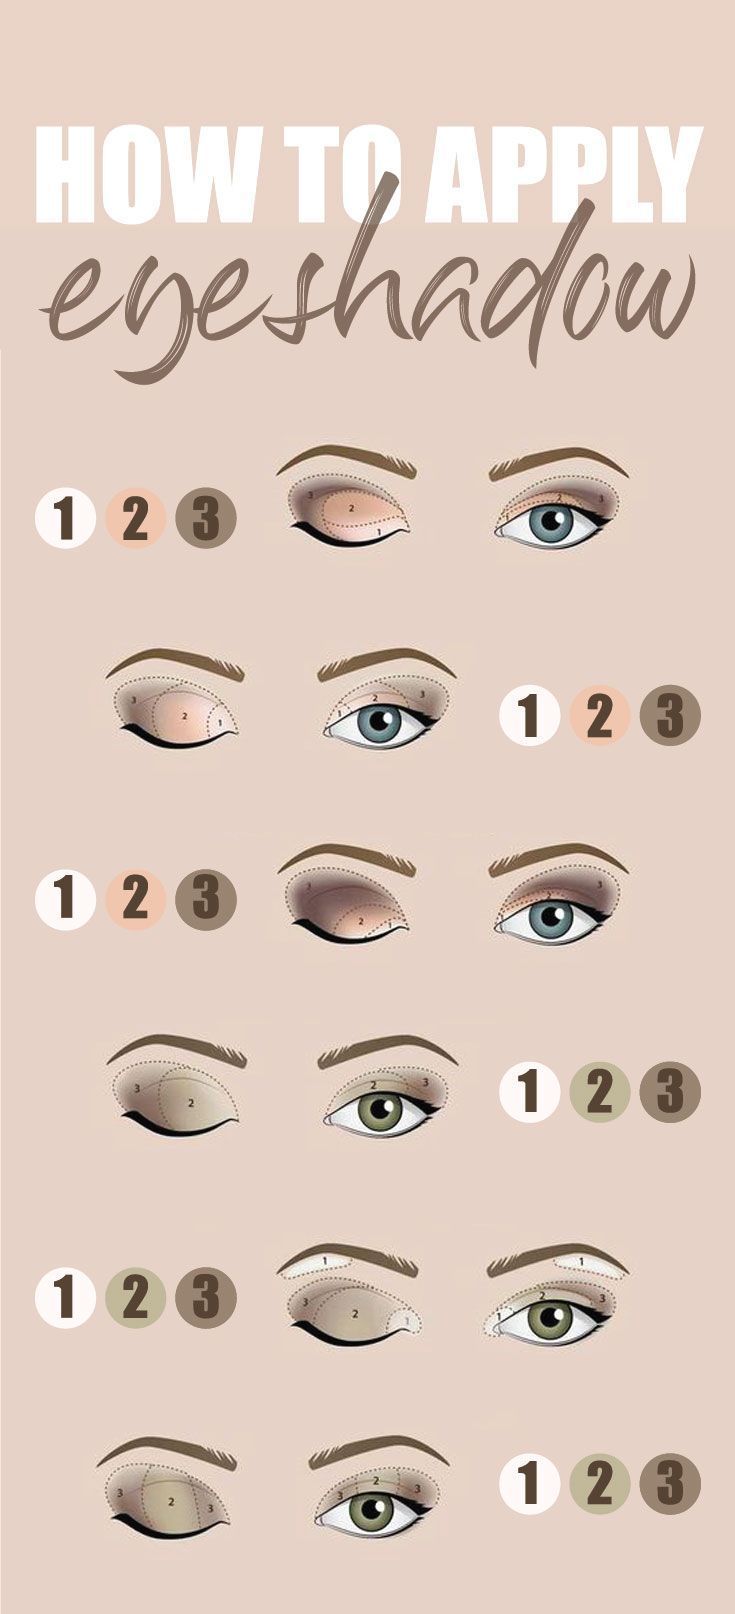 Beauty Eye Makeup Tutorial How to Apply Eyeshadow - Beauty Eye Makeup Tutorial How to Apply Eyeshadow -   15 beauty Eyes man ideas